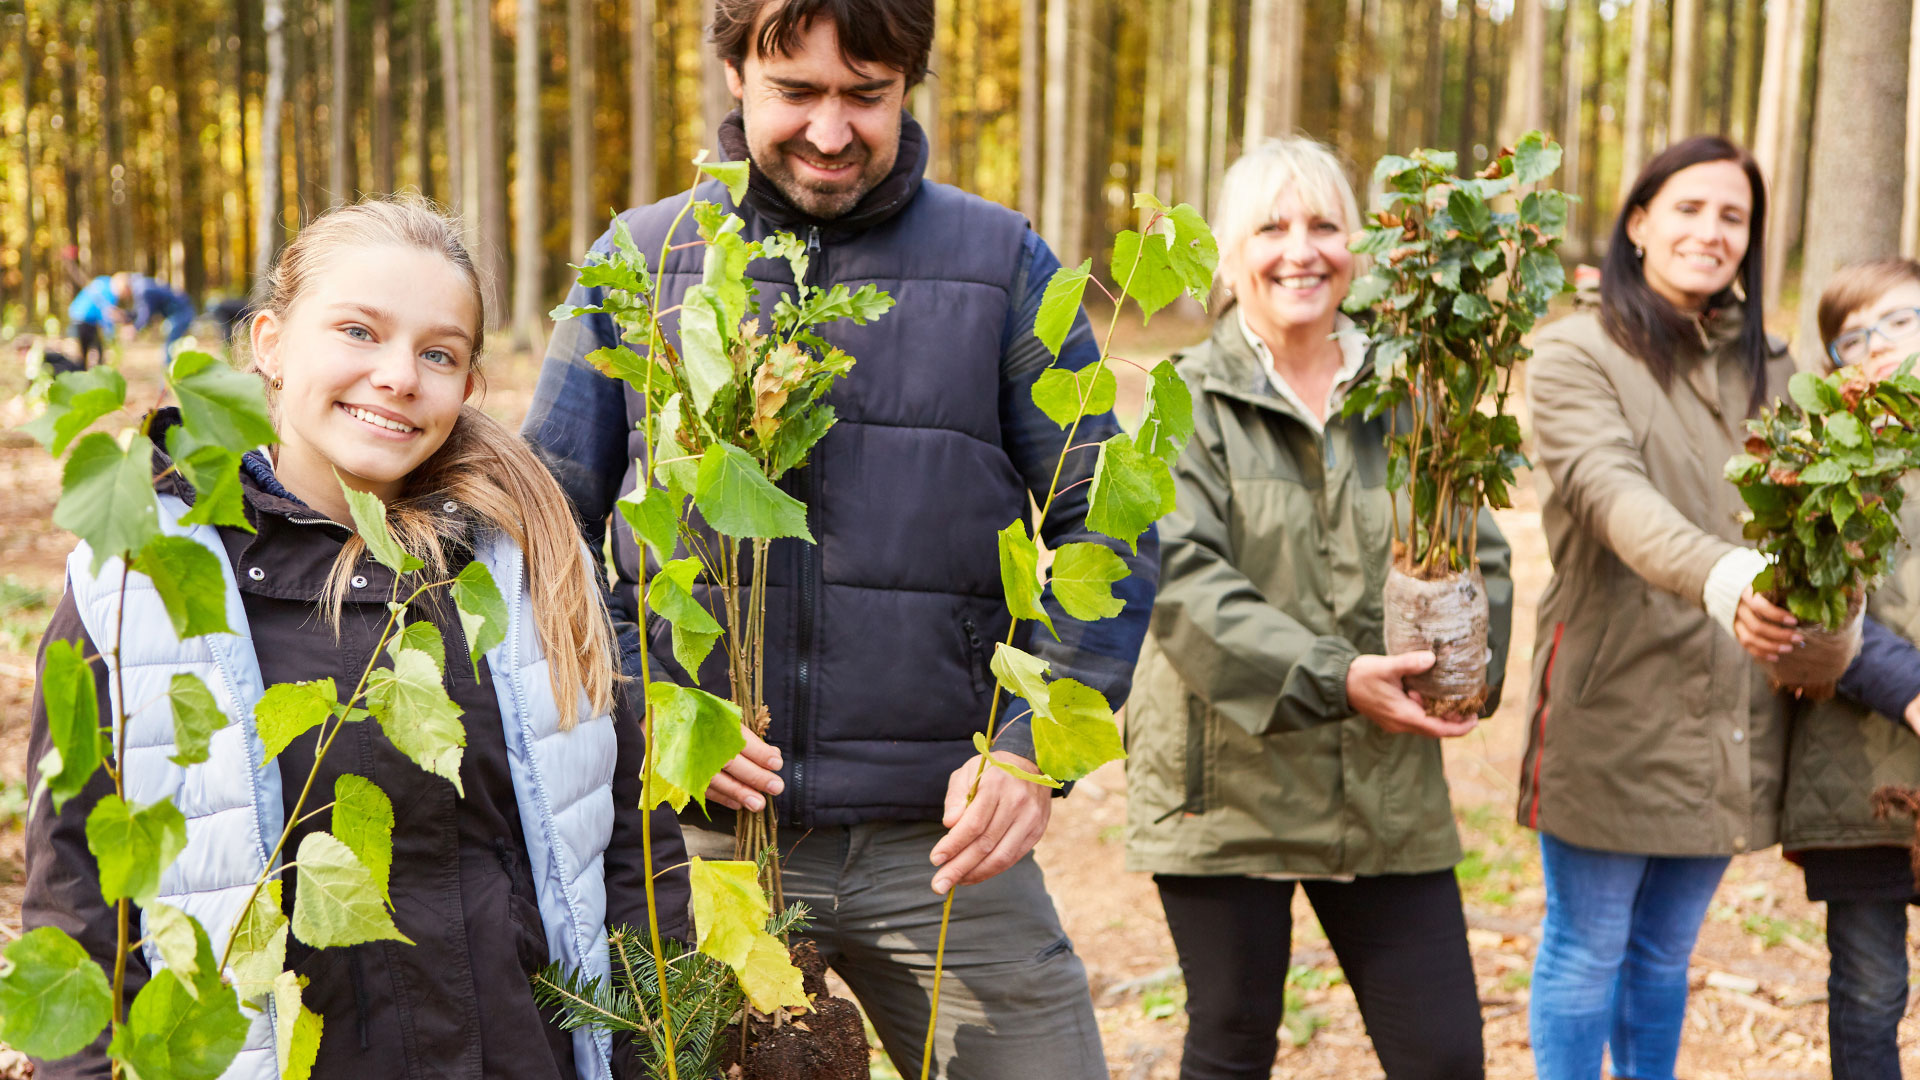 Baumpflanzung: Linde, Eiche & Buche